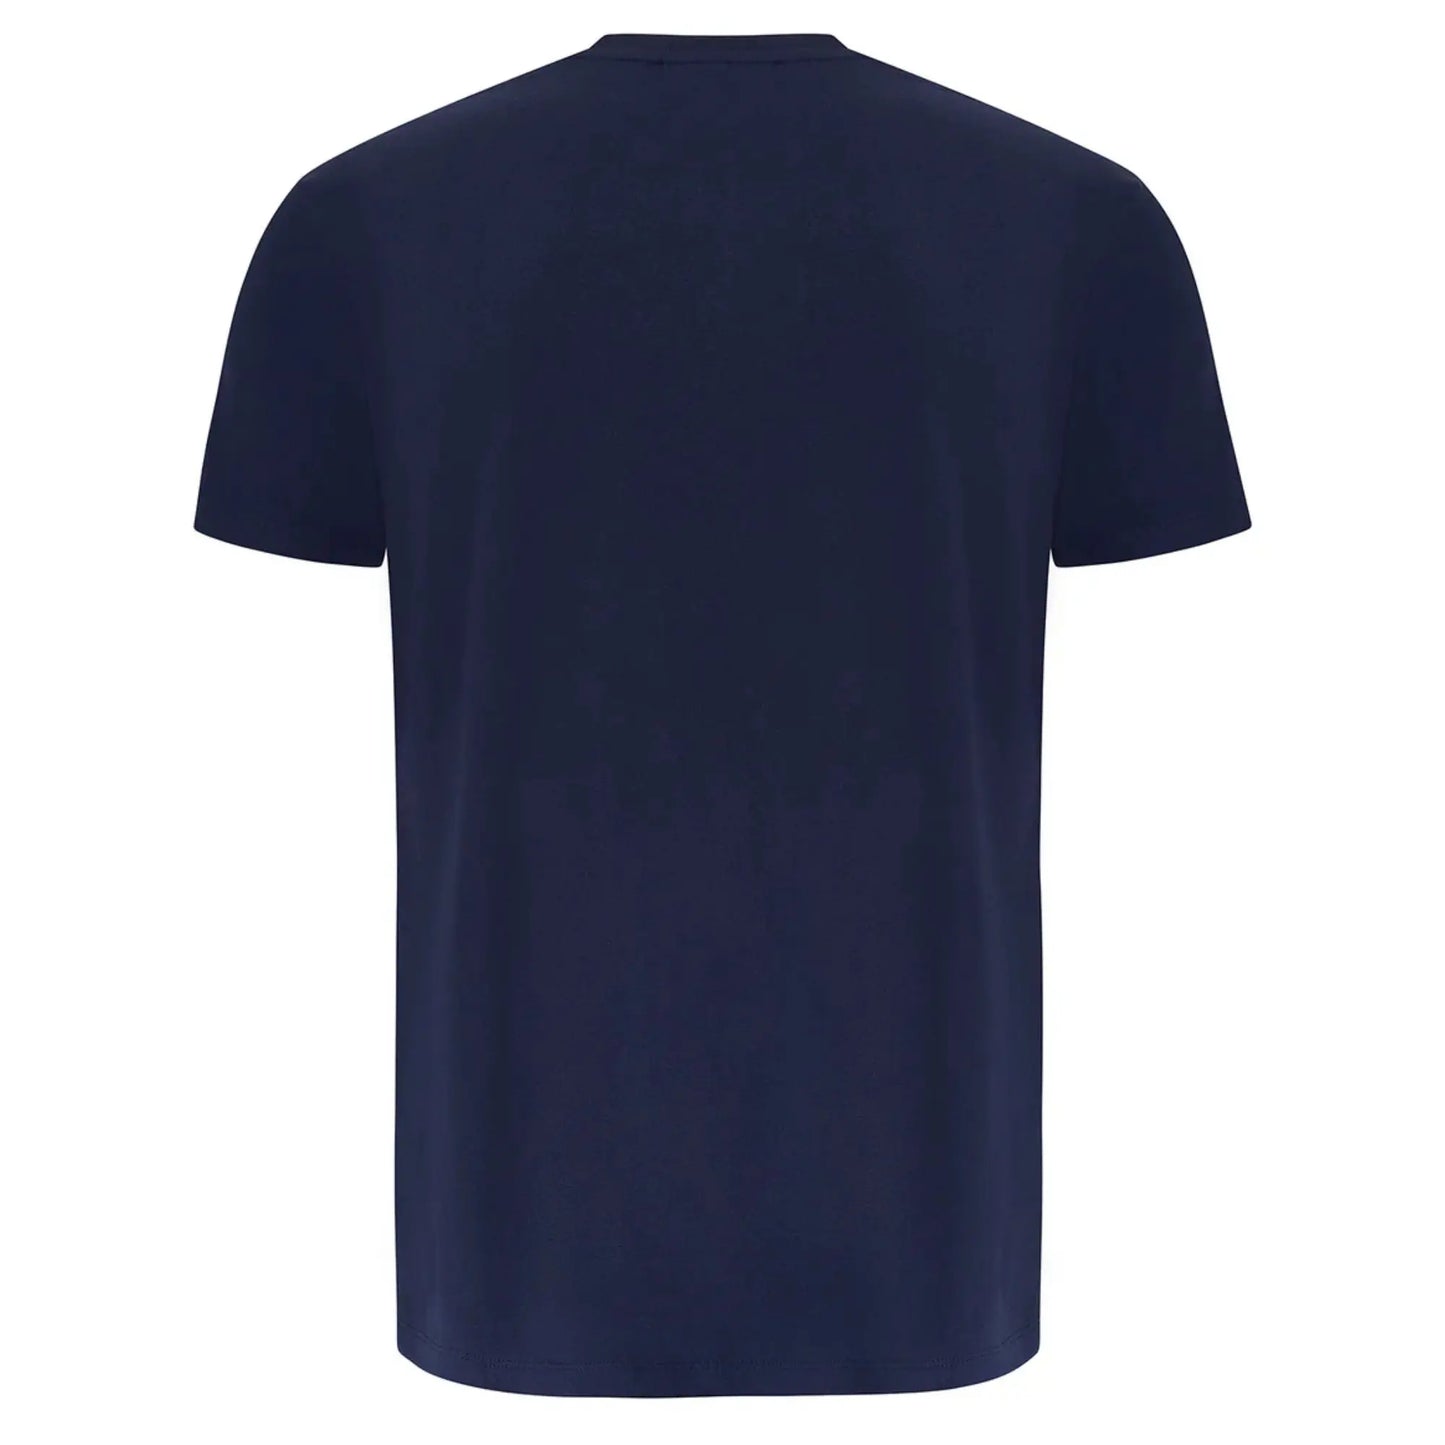 Buy Merc London Naunton Pin Badge T-Shirt - Navy | T-Shirtss at Woven Durham